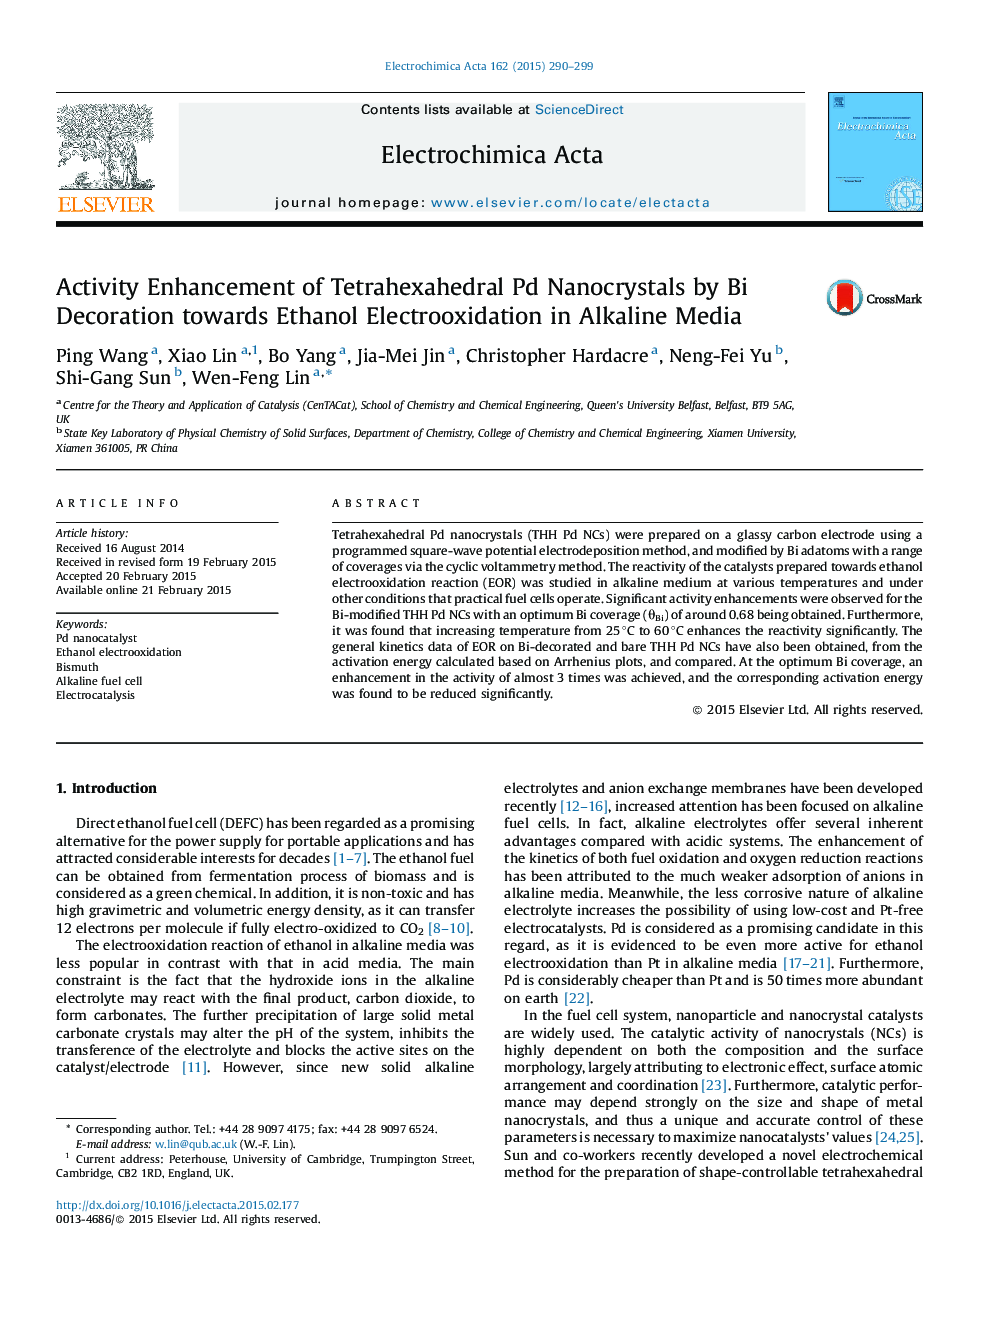 Activity Enhancement of Tetrahexahedral Pd Nanocrystals by Bi Decoration towards Ethanol Electrooxidation in Alkaline Media